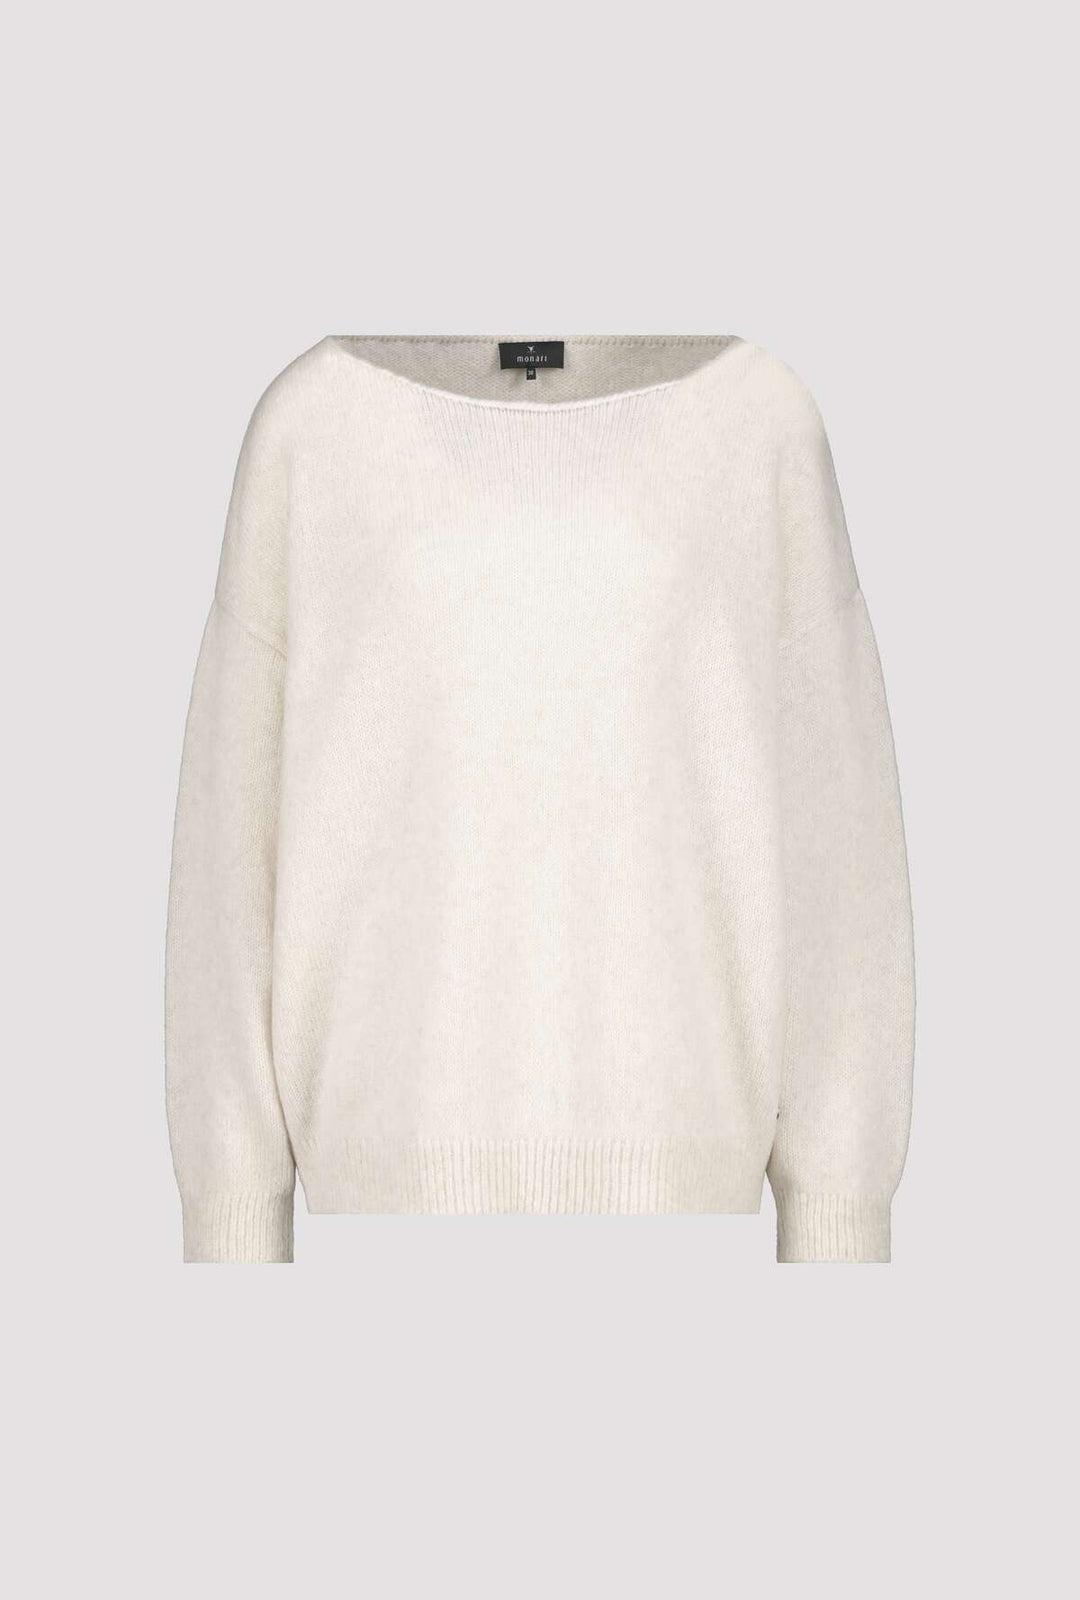 Monari Fancy Yarn Sweater